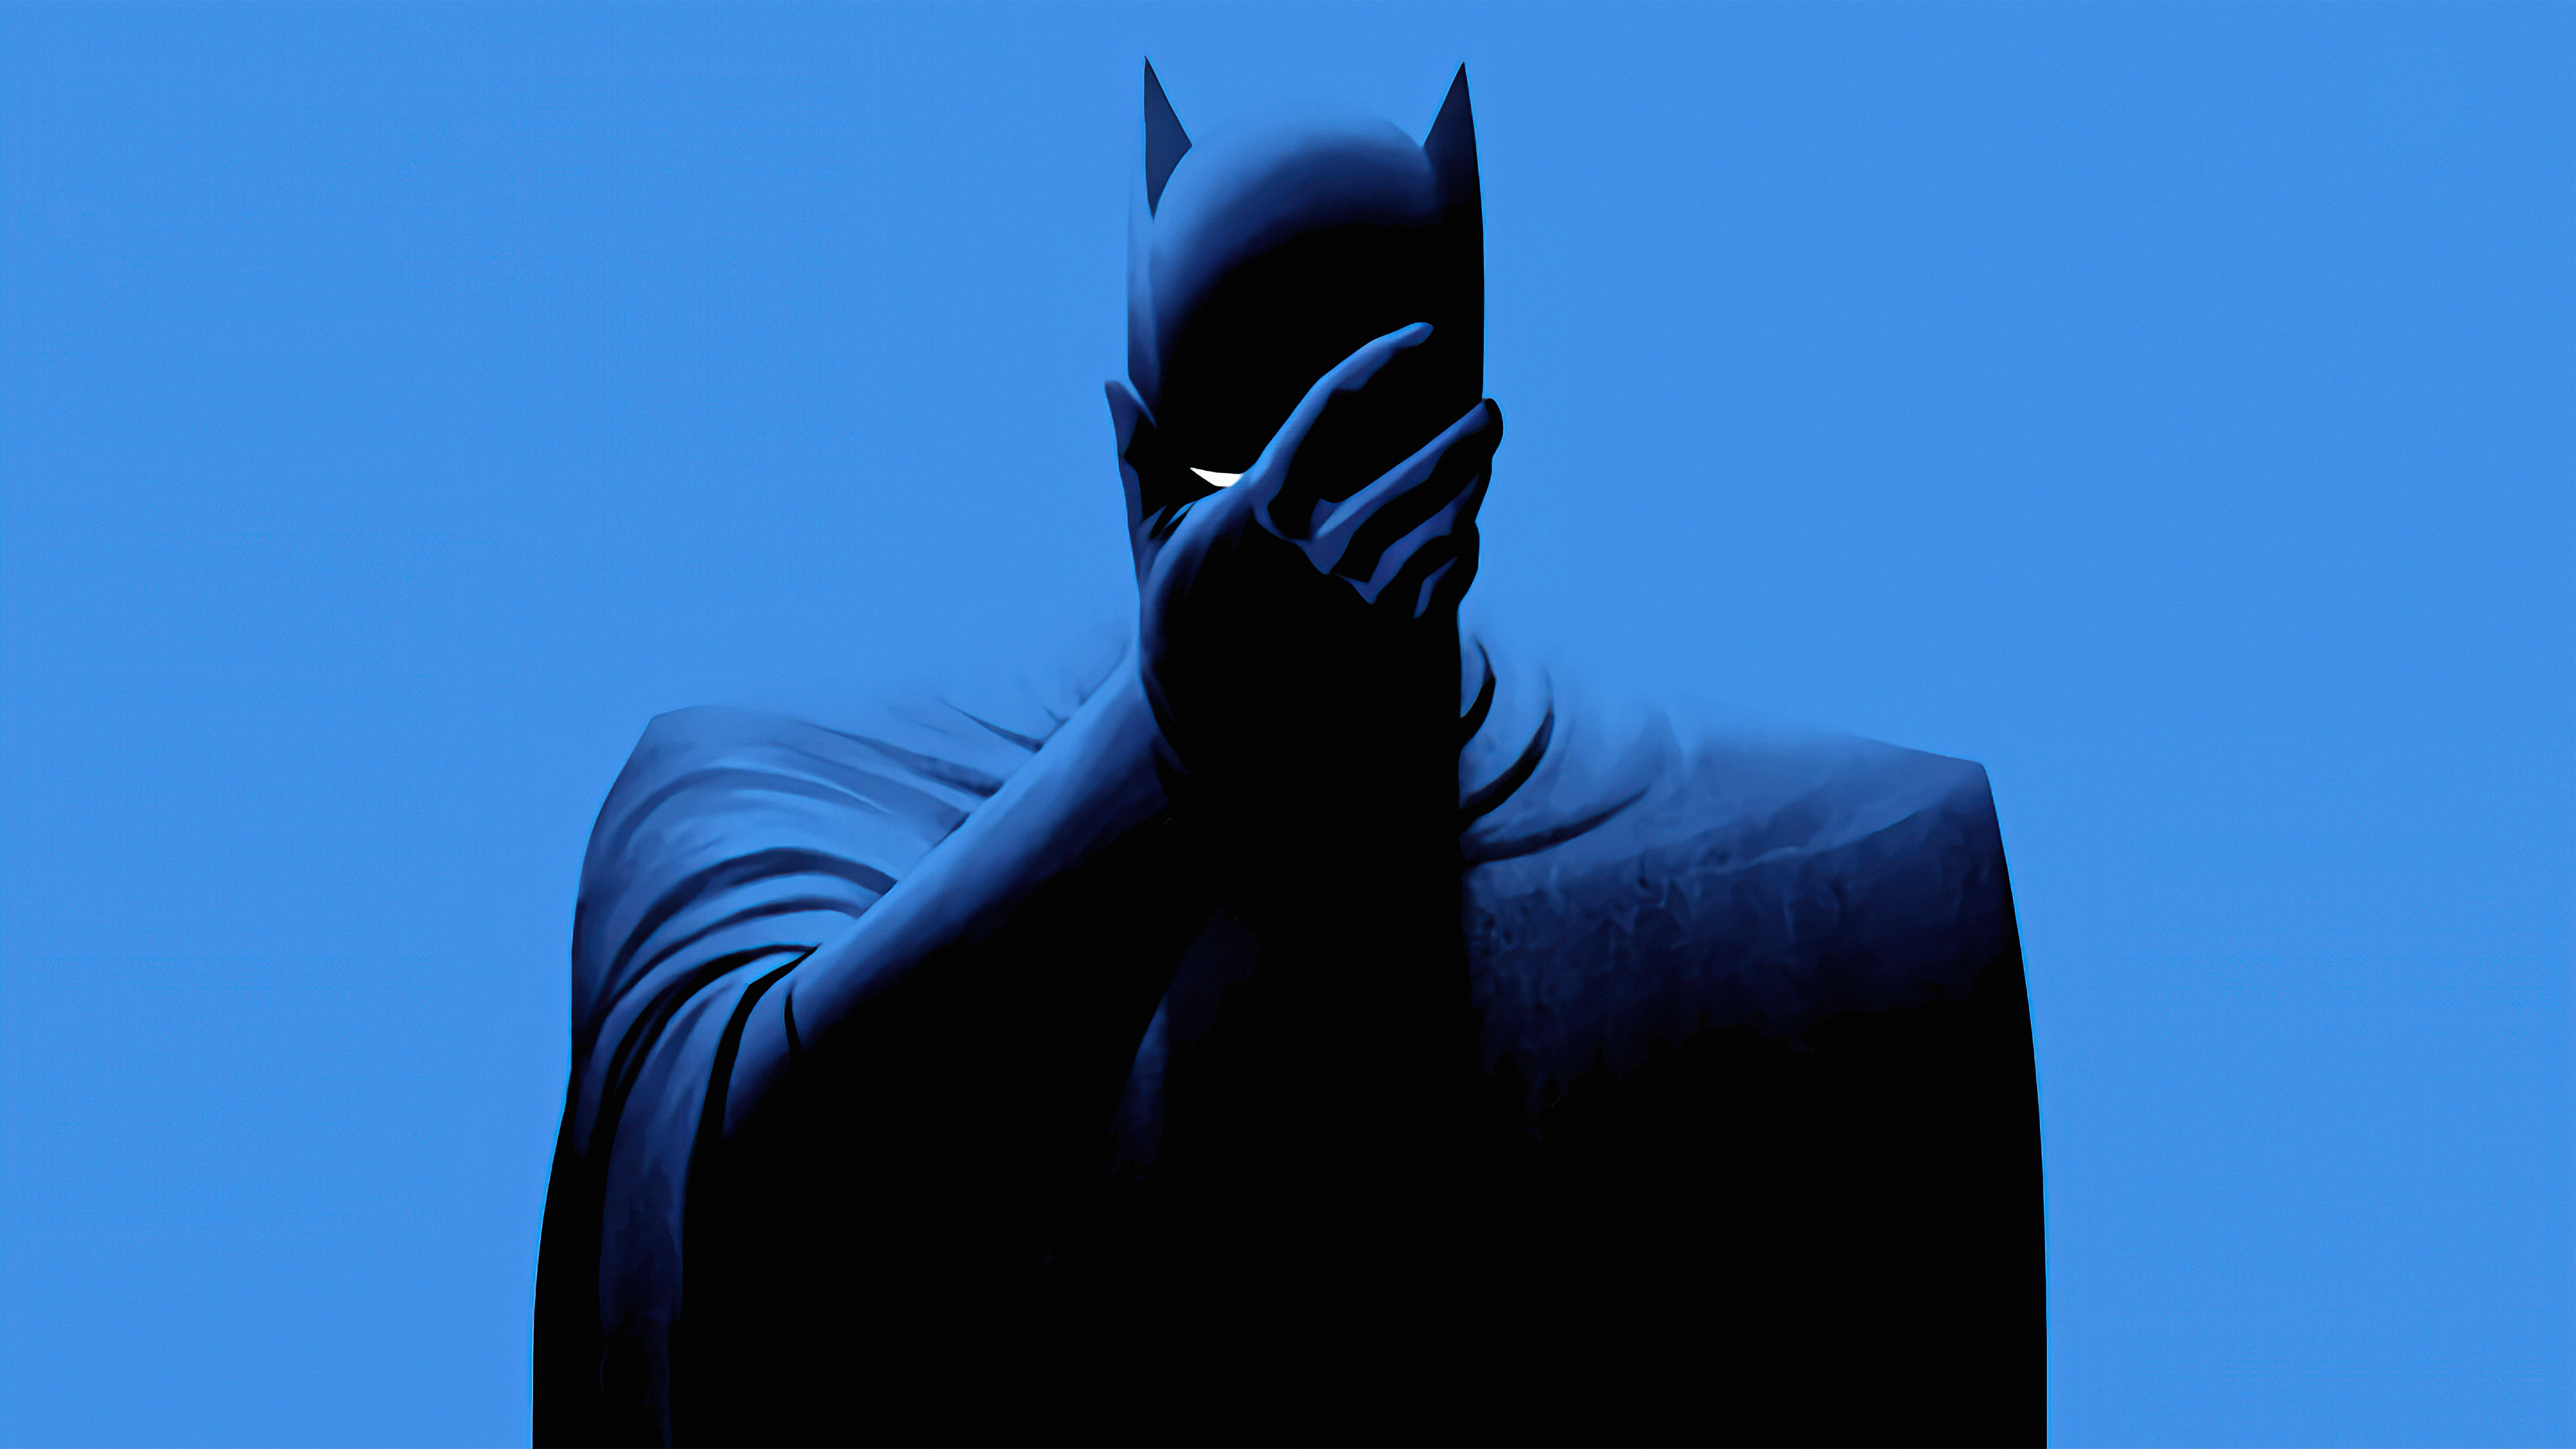 Batman Minimalist style blue background Wallpaper 5k Ultra HD